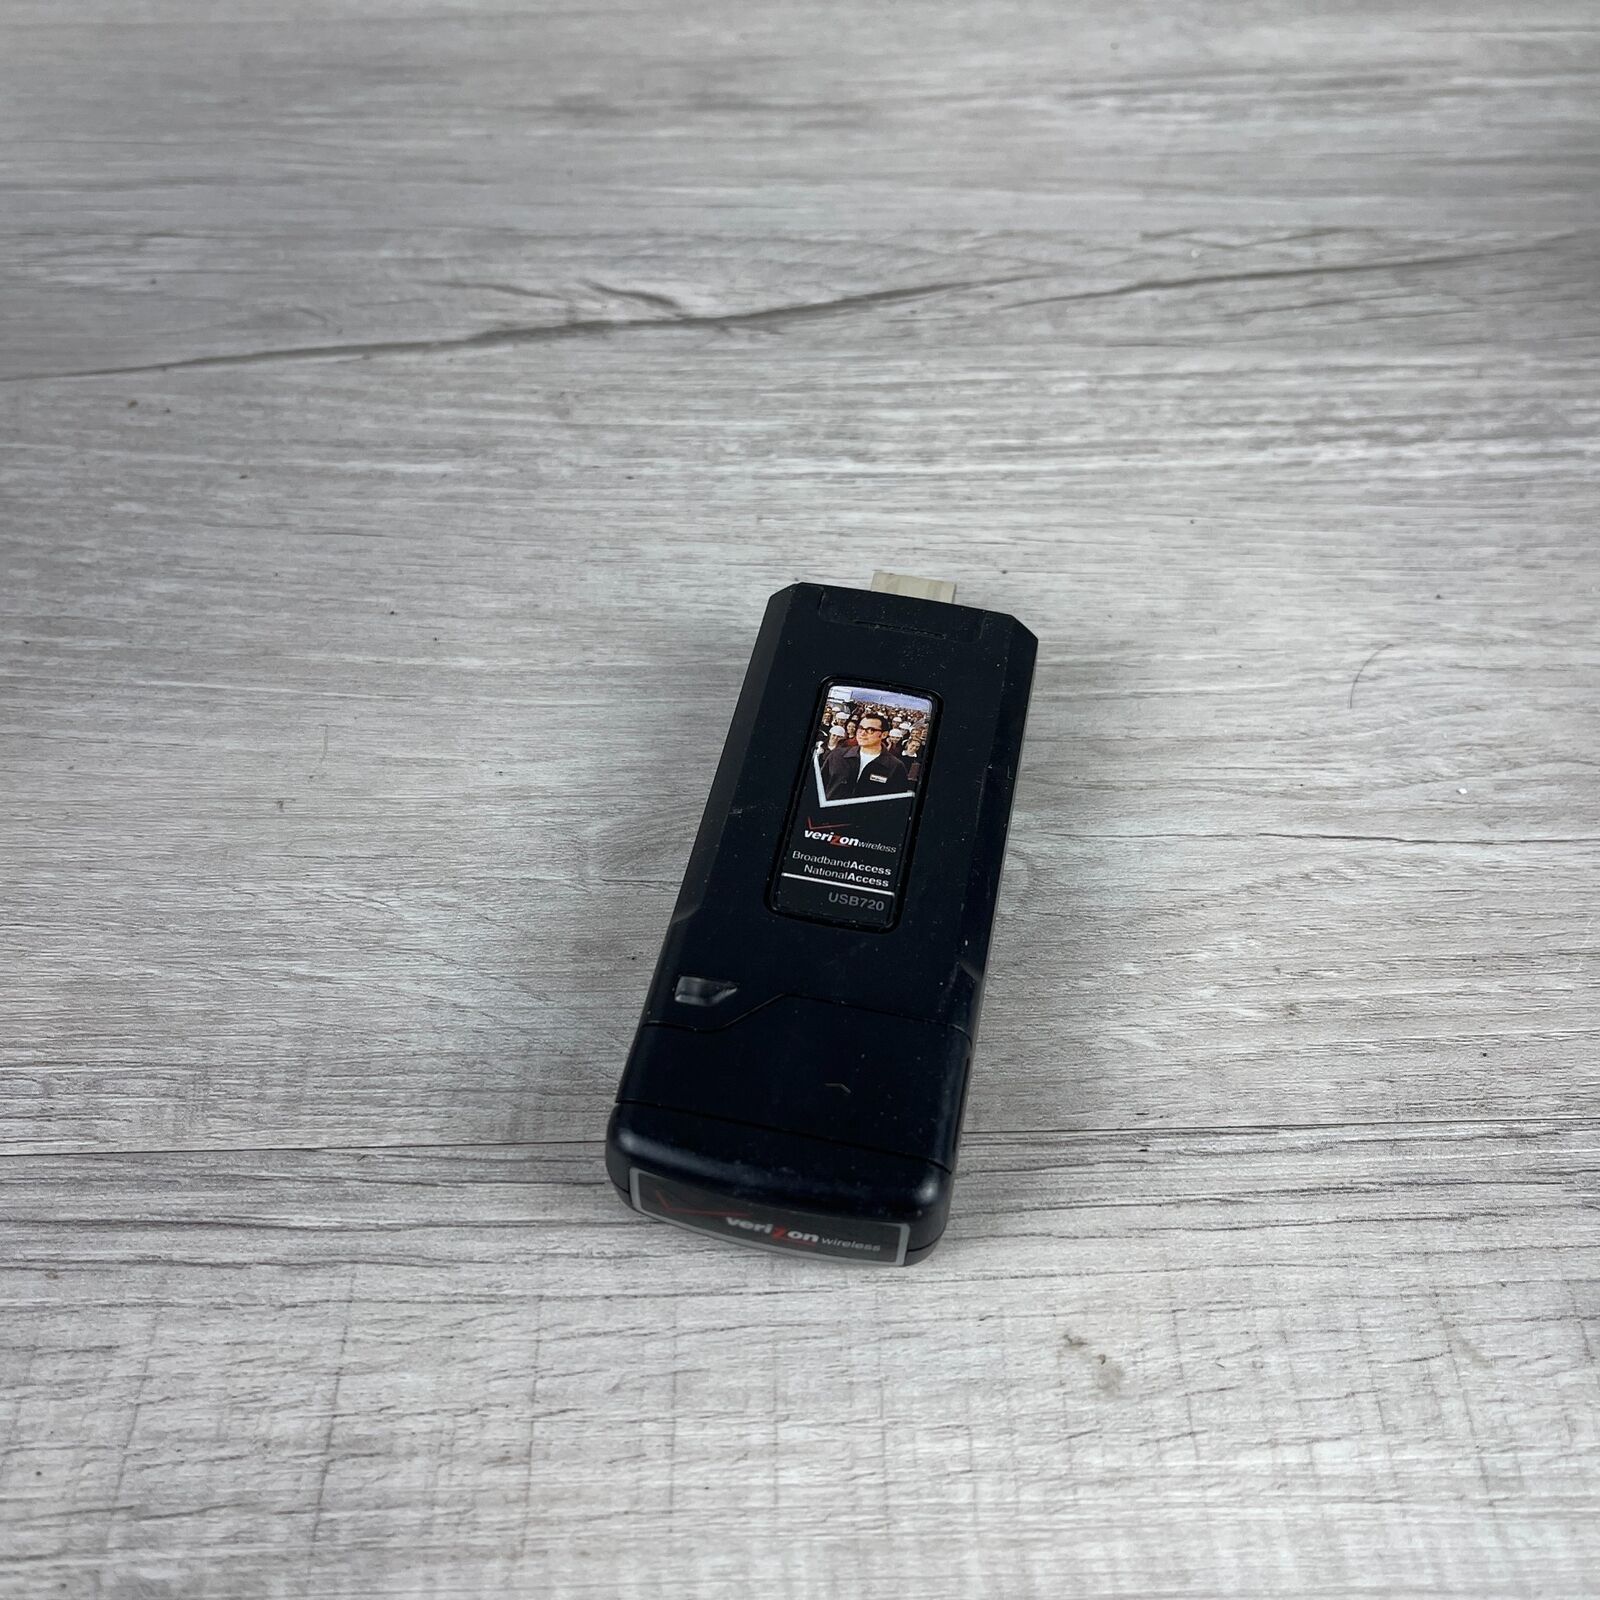 Novatel Verizon USB720 Black Handheld Mobile Wireless Broadband 3G USB Modem